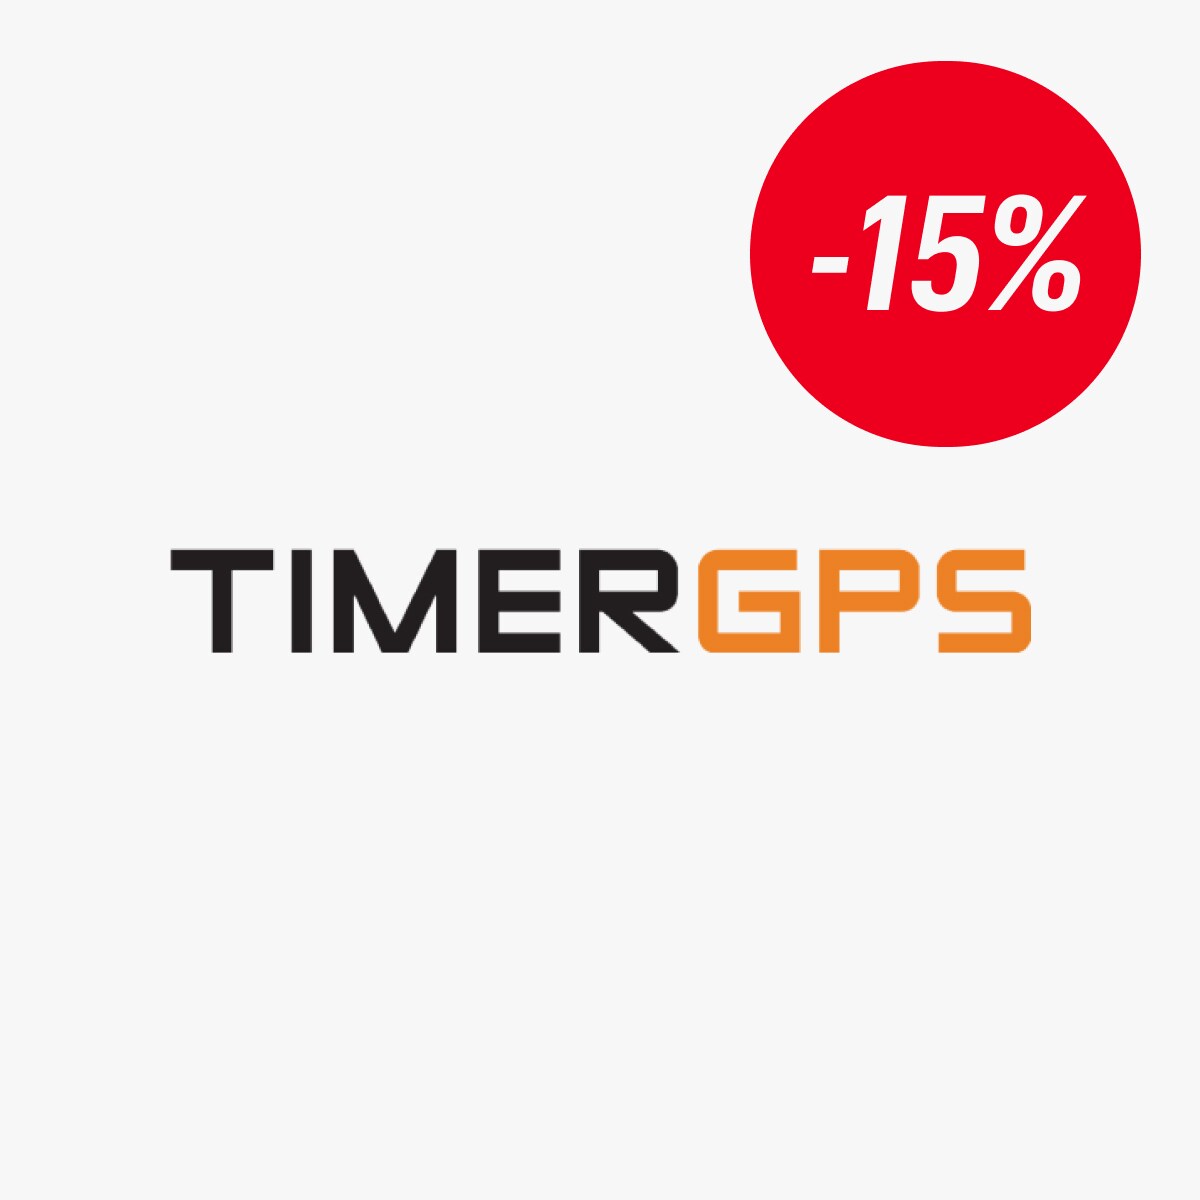 TIMER GPS